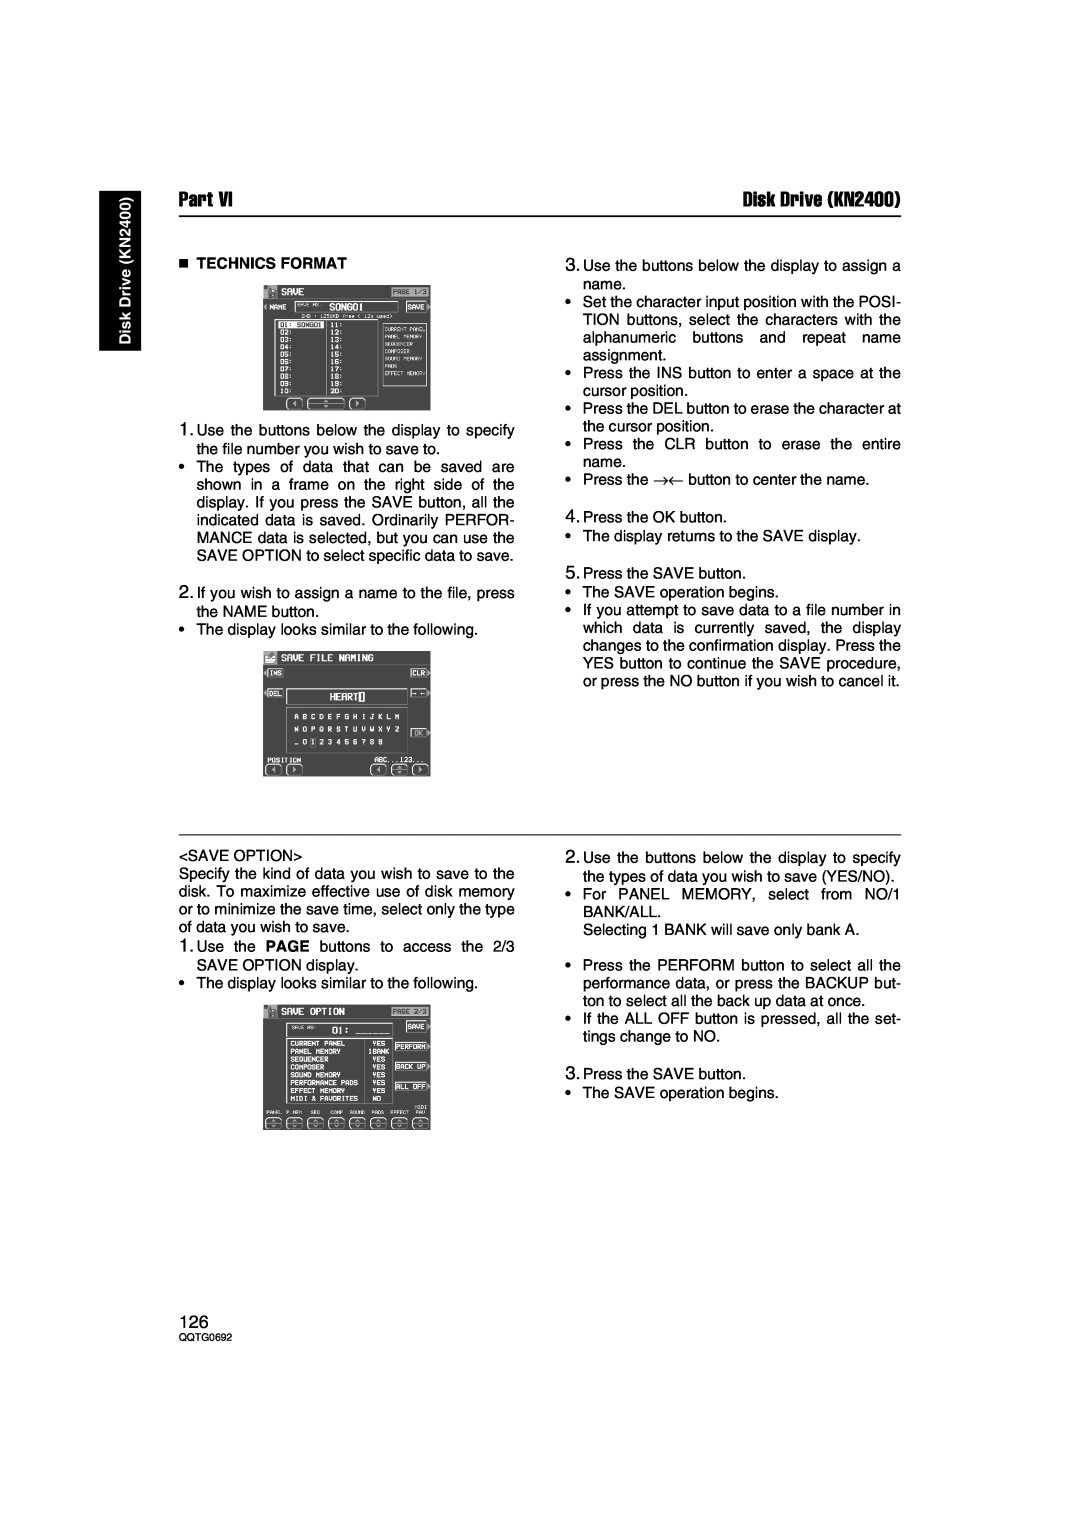 Panasonic SX-KN2600, SX-KN2400 manual Technics Format, Part, Disk Drive KN2400 